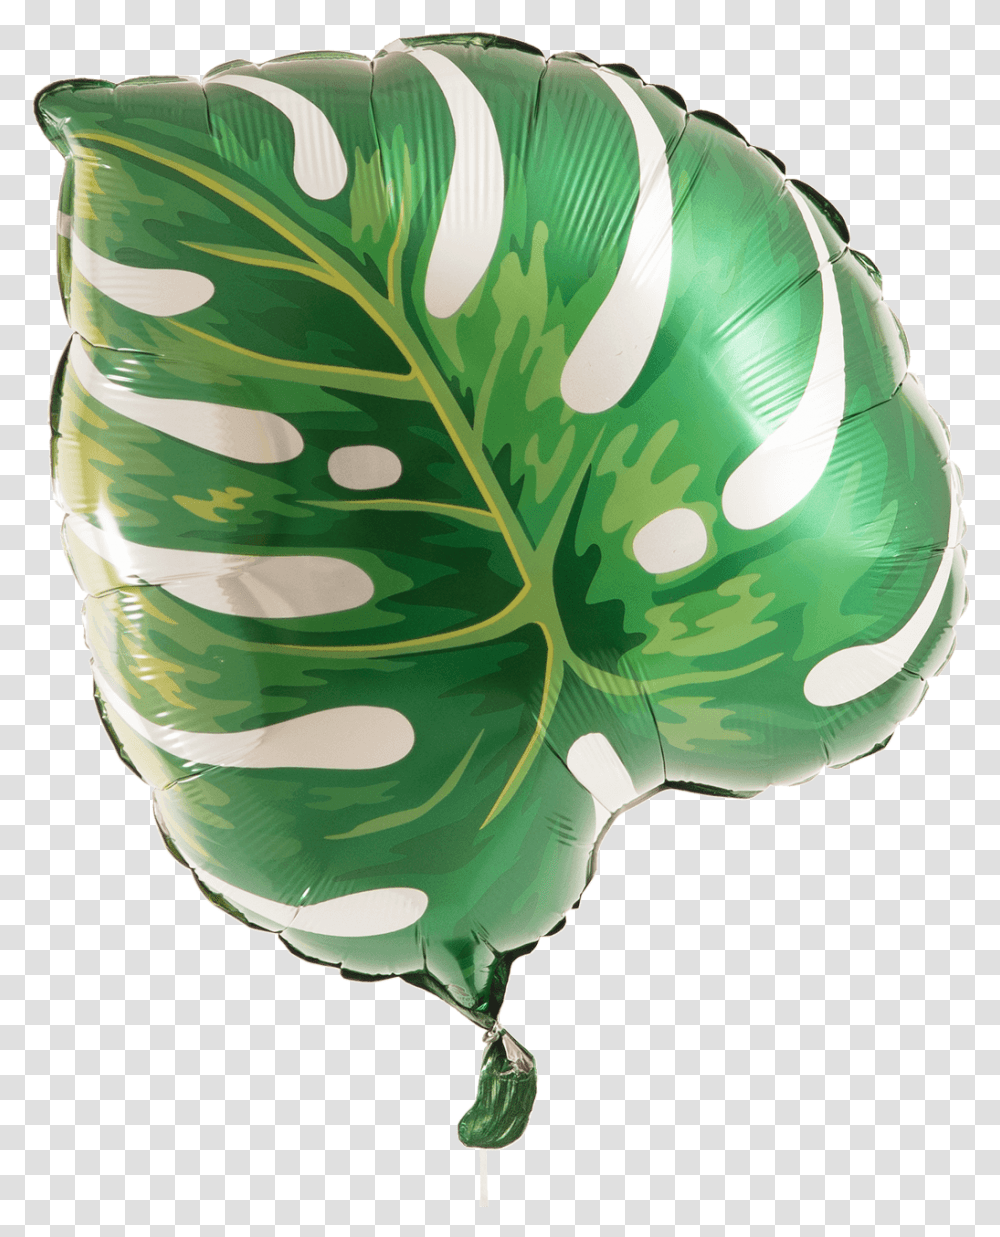 A Tropical Leaf Balloon Tropical Leaf, Plant, Vegetable, Food, Fruit Transparent Png